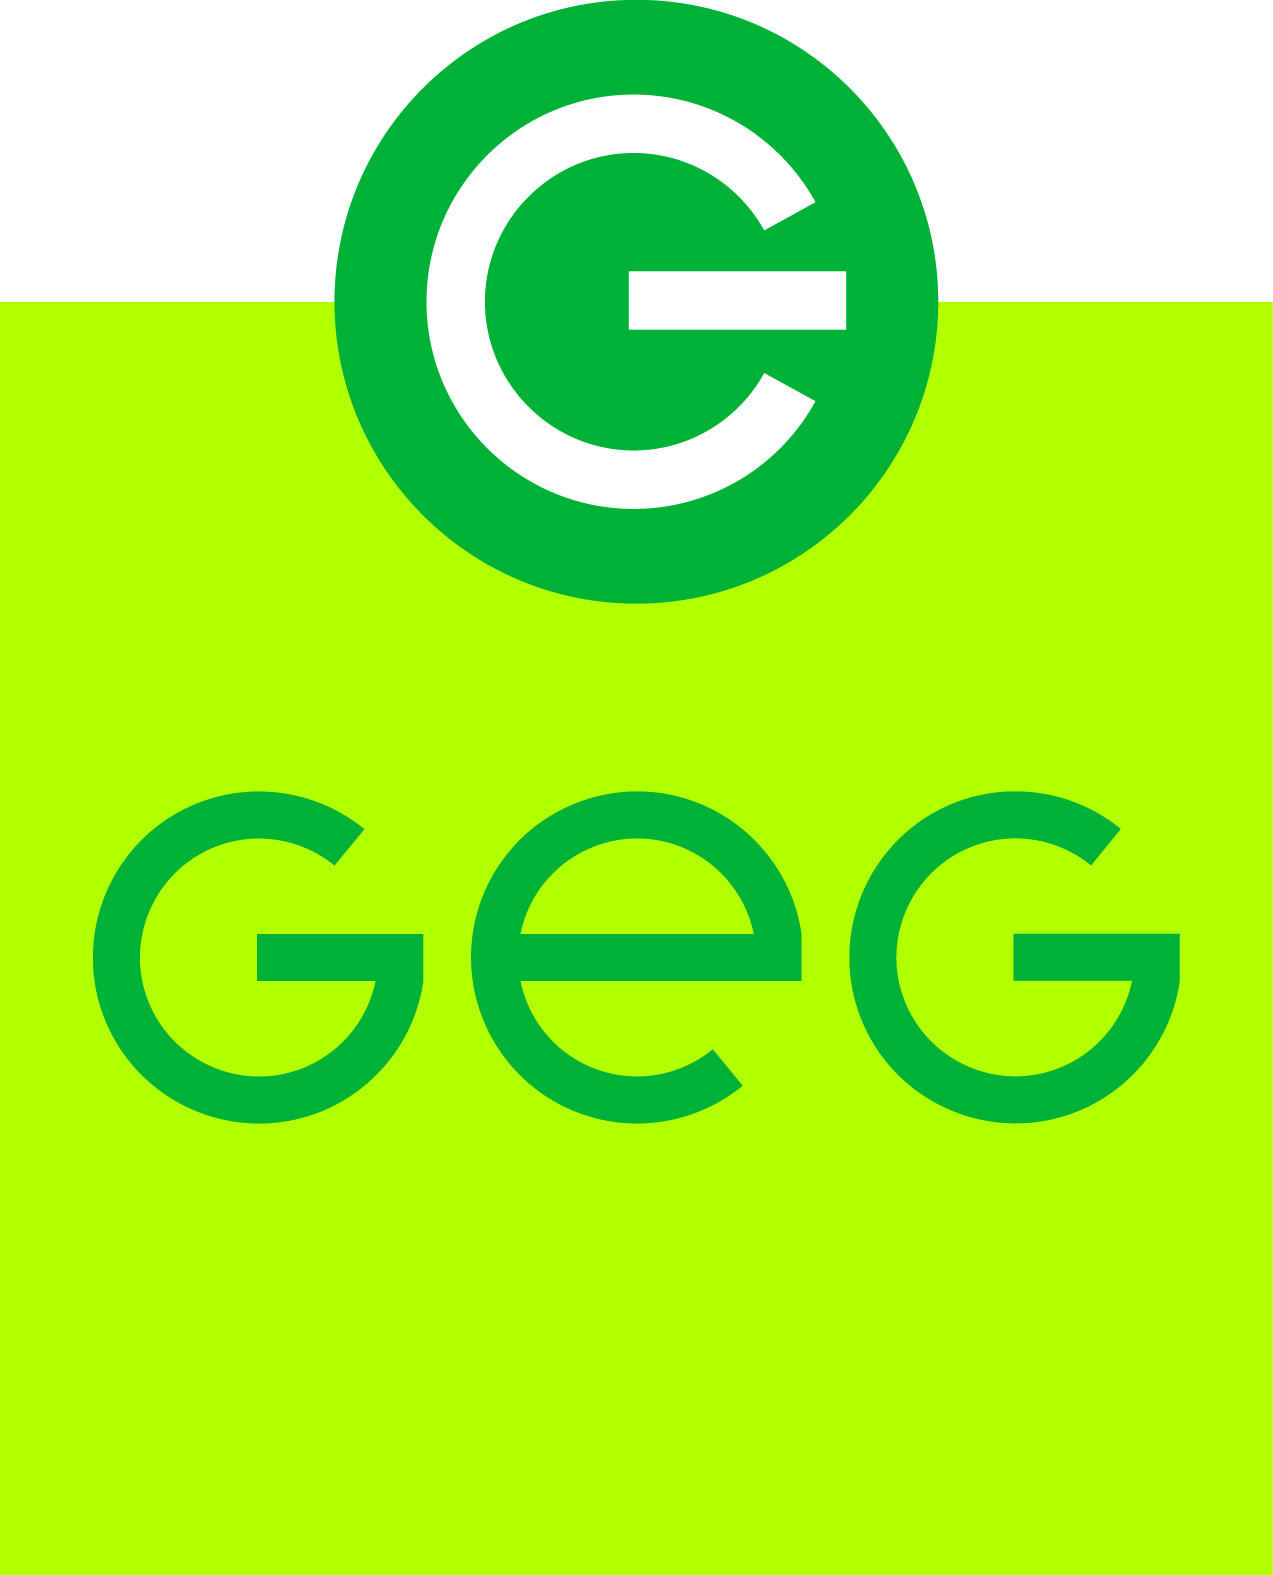 File:Logo GEG.jpg - Wikimedia Commons